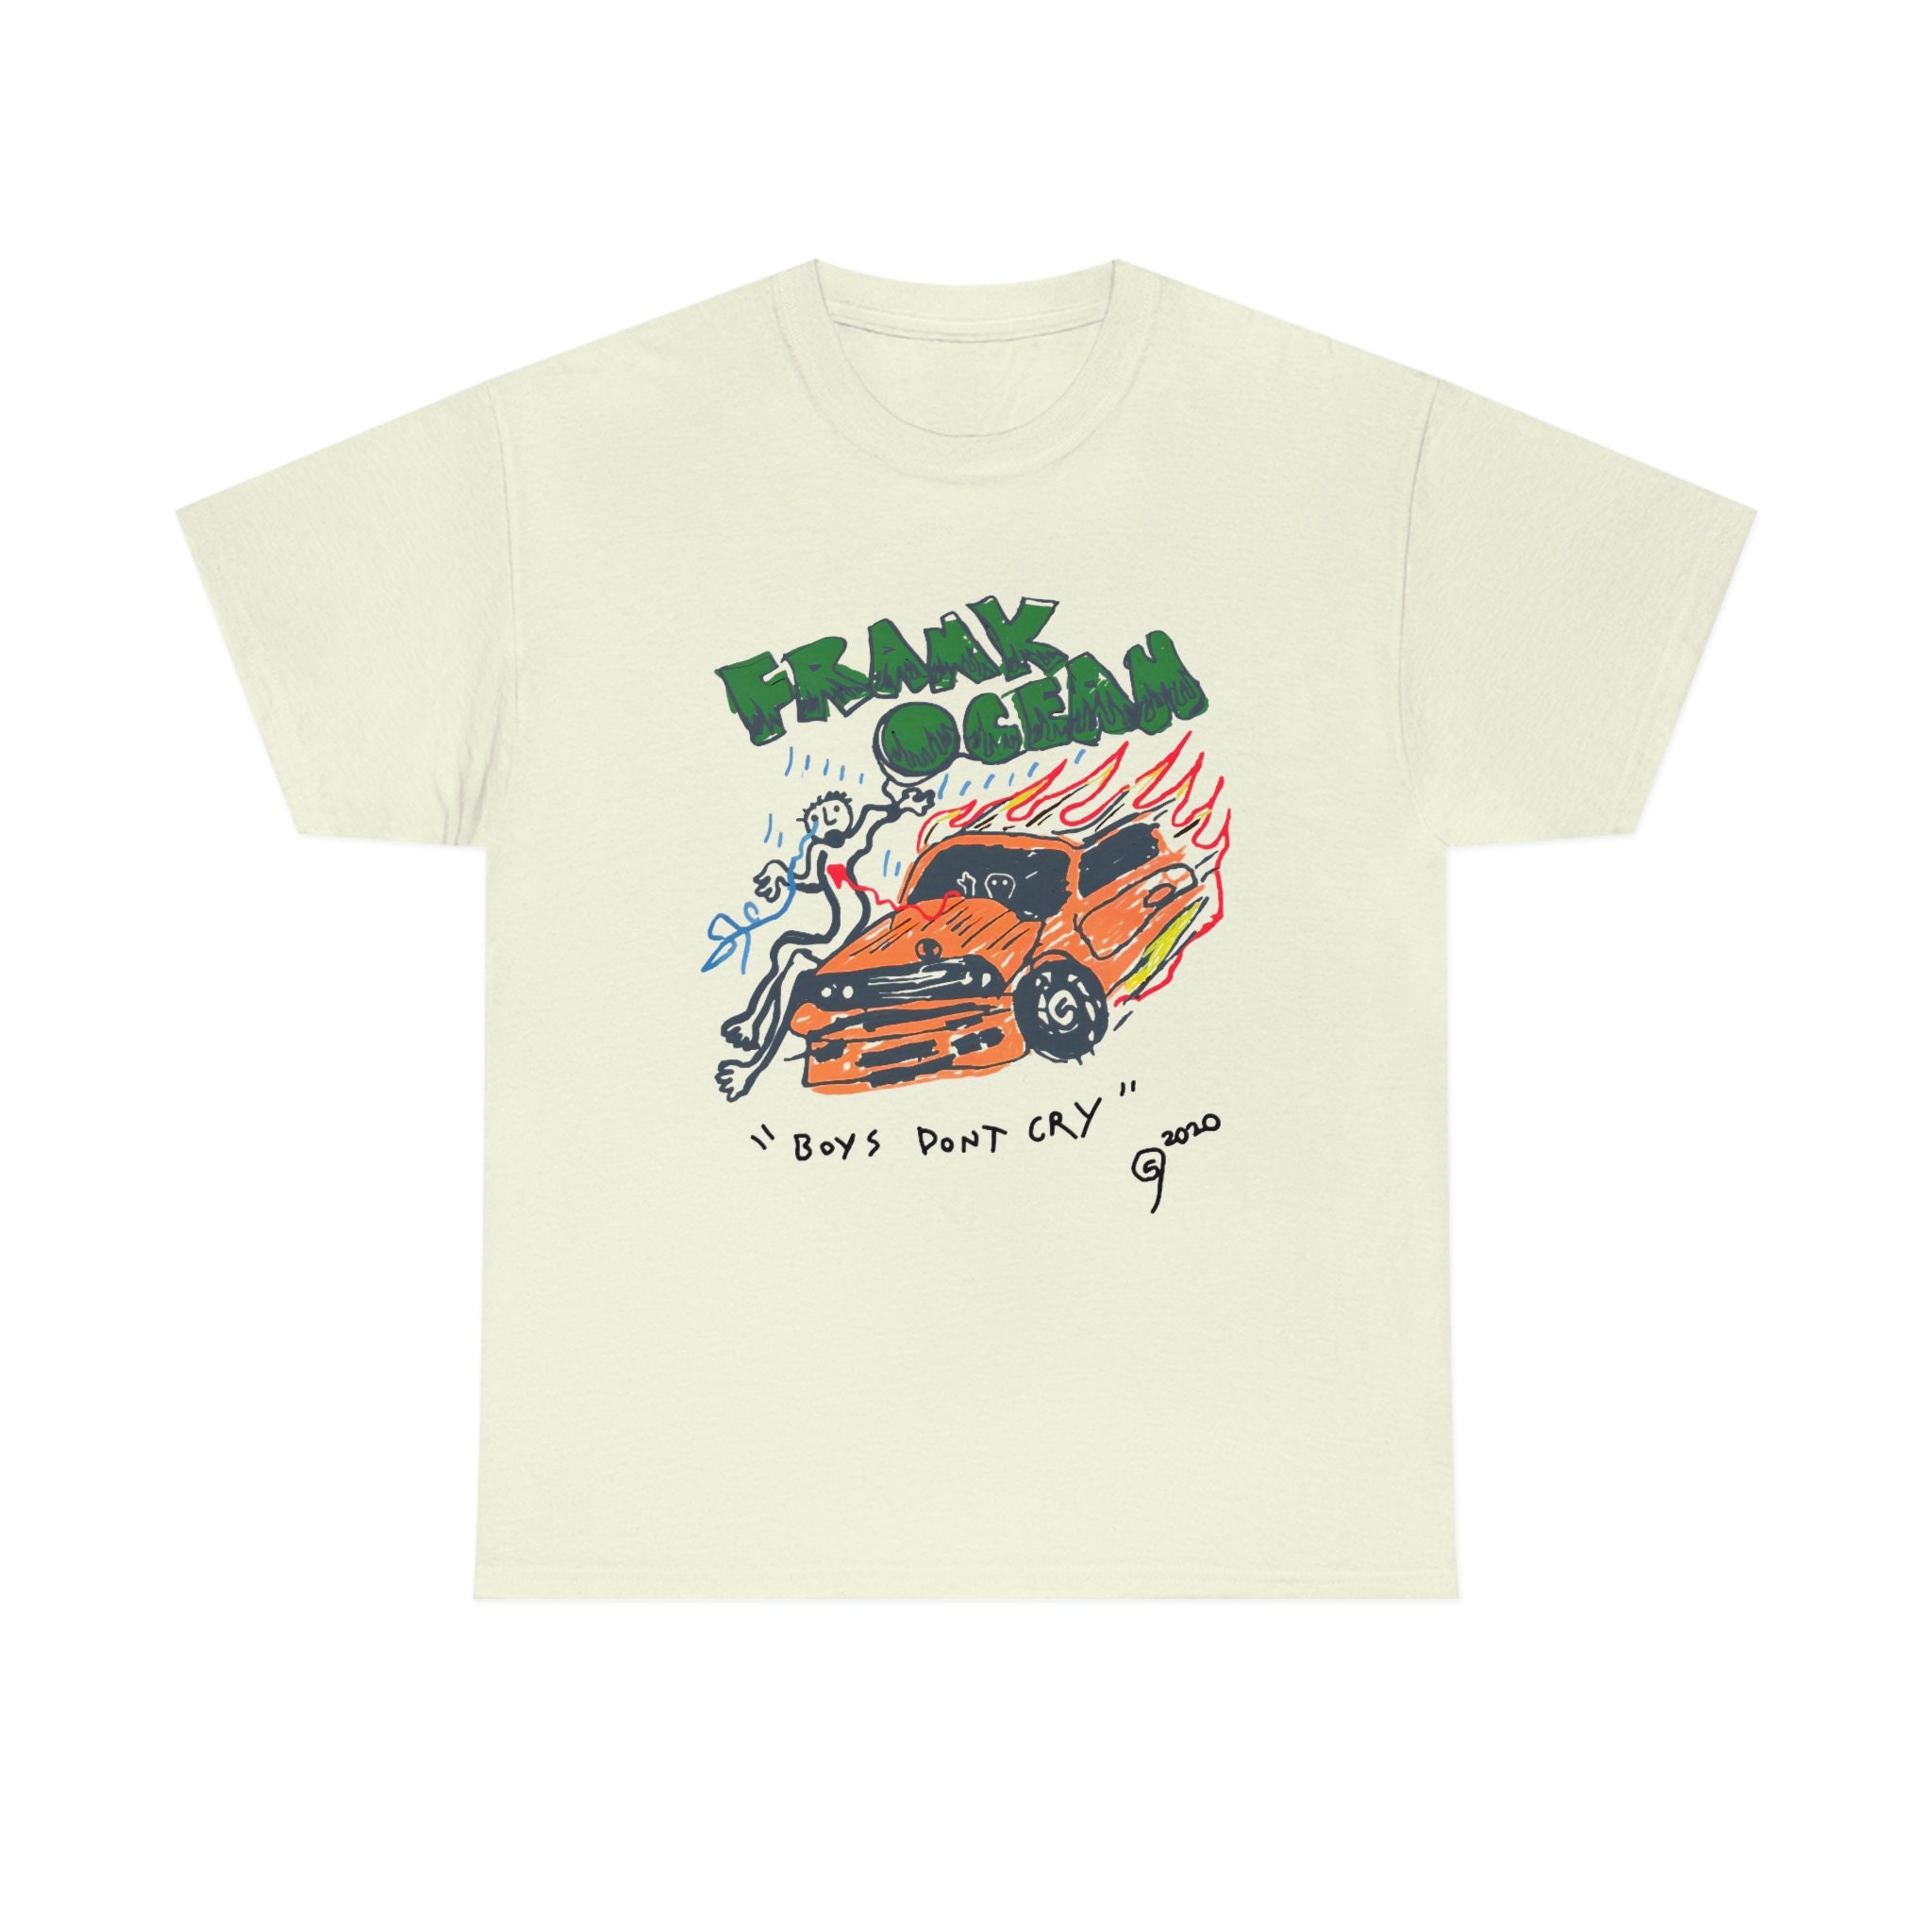 Frank Ocean Unisex T-shirt, Boys Don't Cry, Frank Ocean Blond